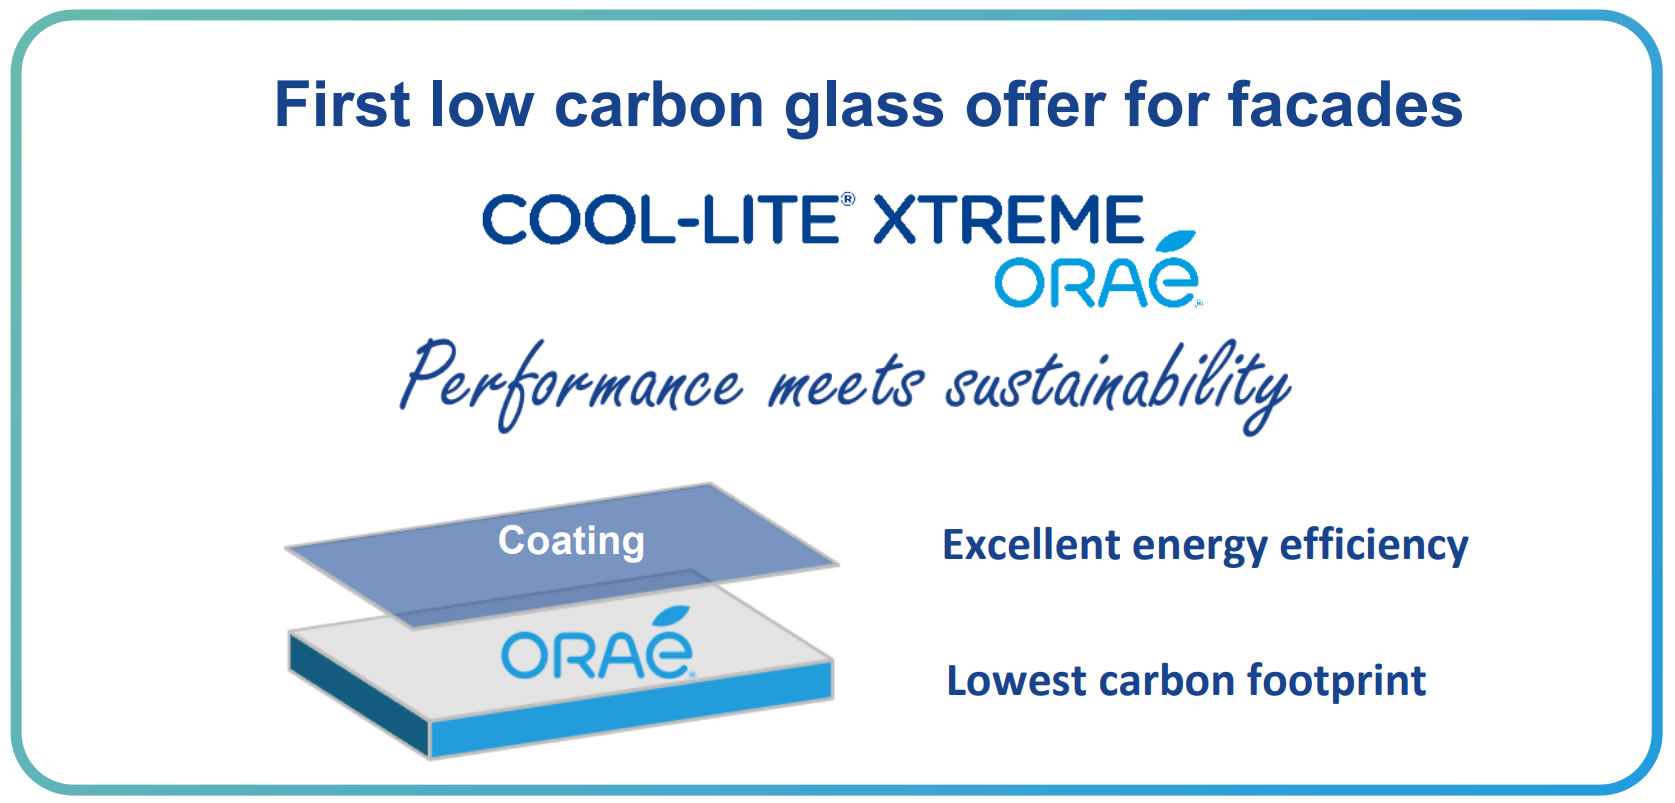 Orae Low carbon glass - Saint gobain glass